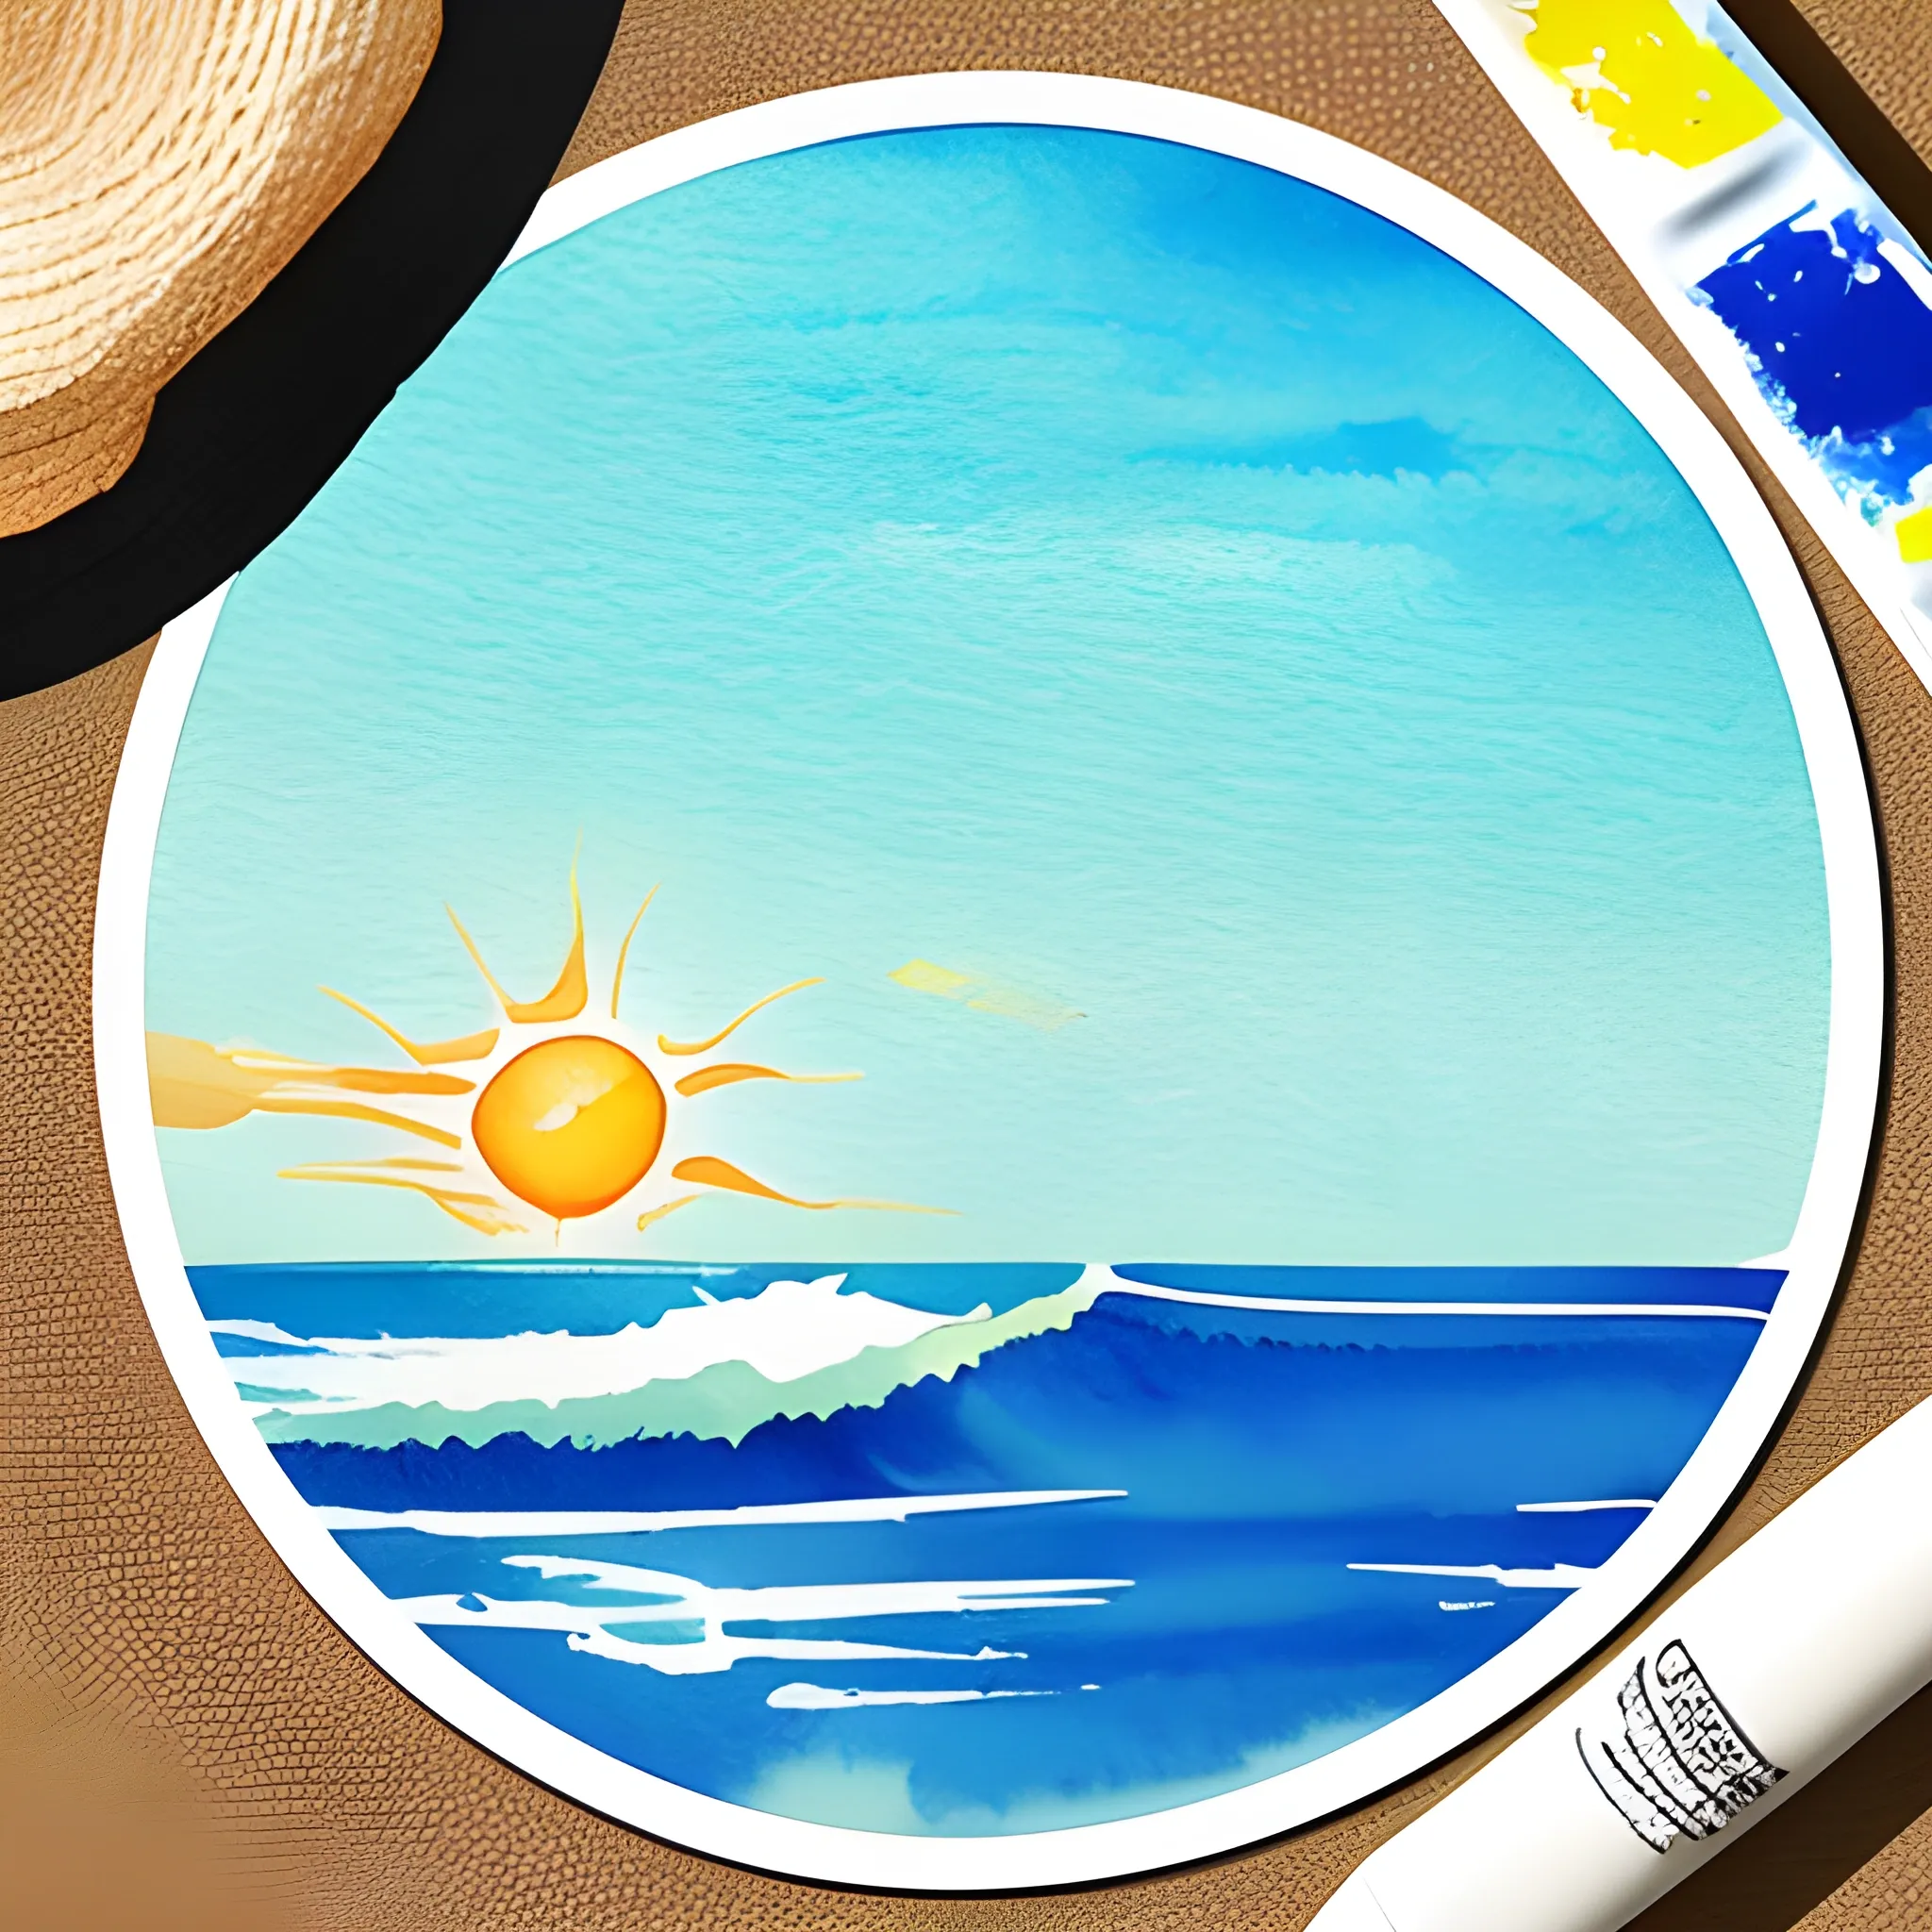 
LOGO PERFECT BEACH SUN PALMER SEA SURF 
, Water Color